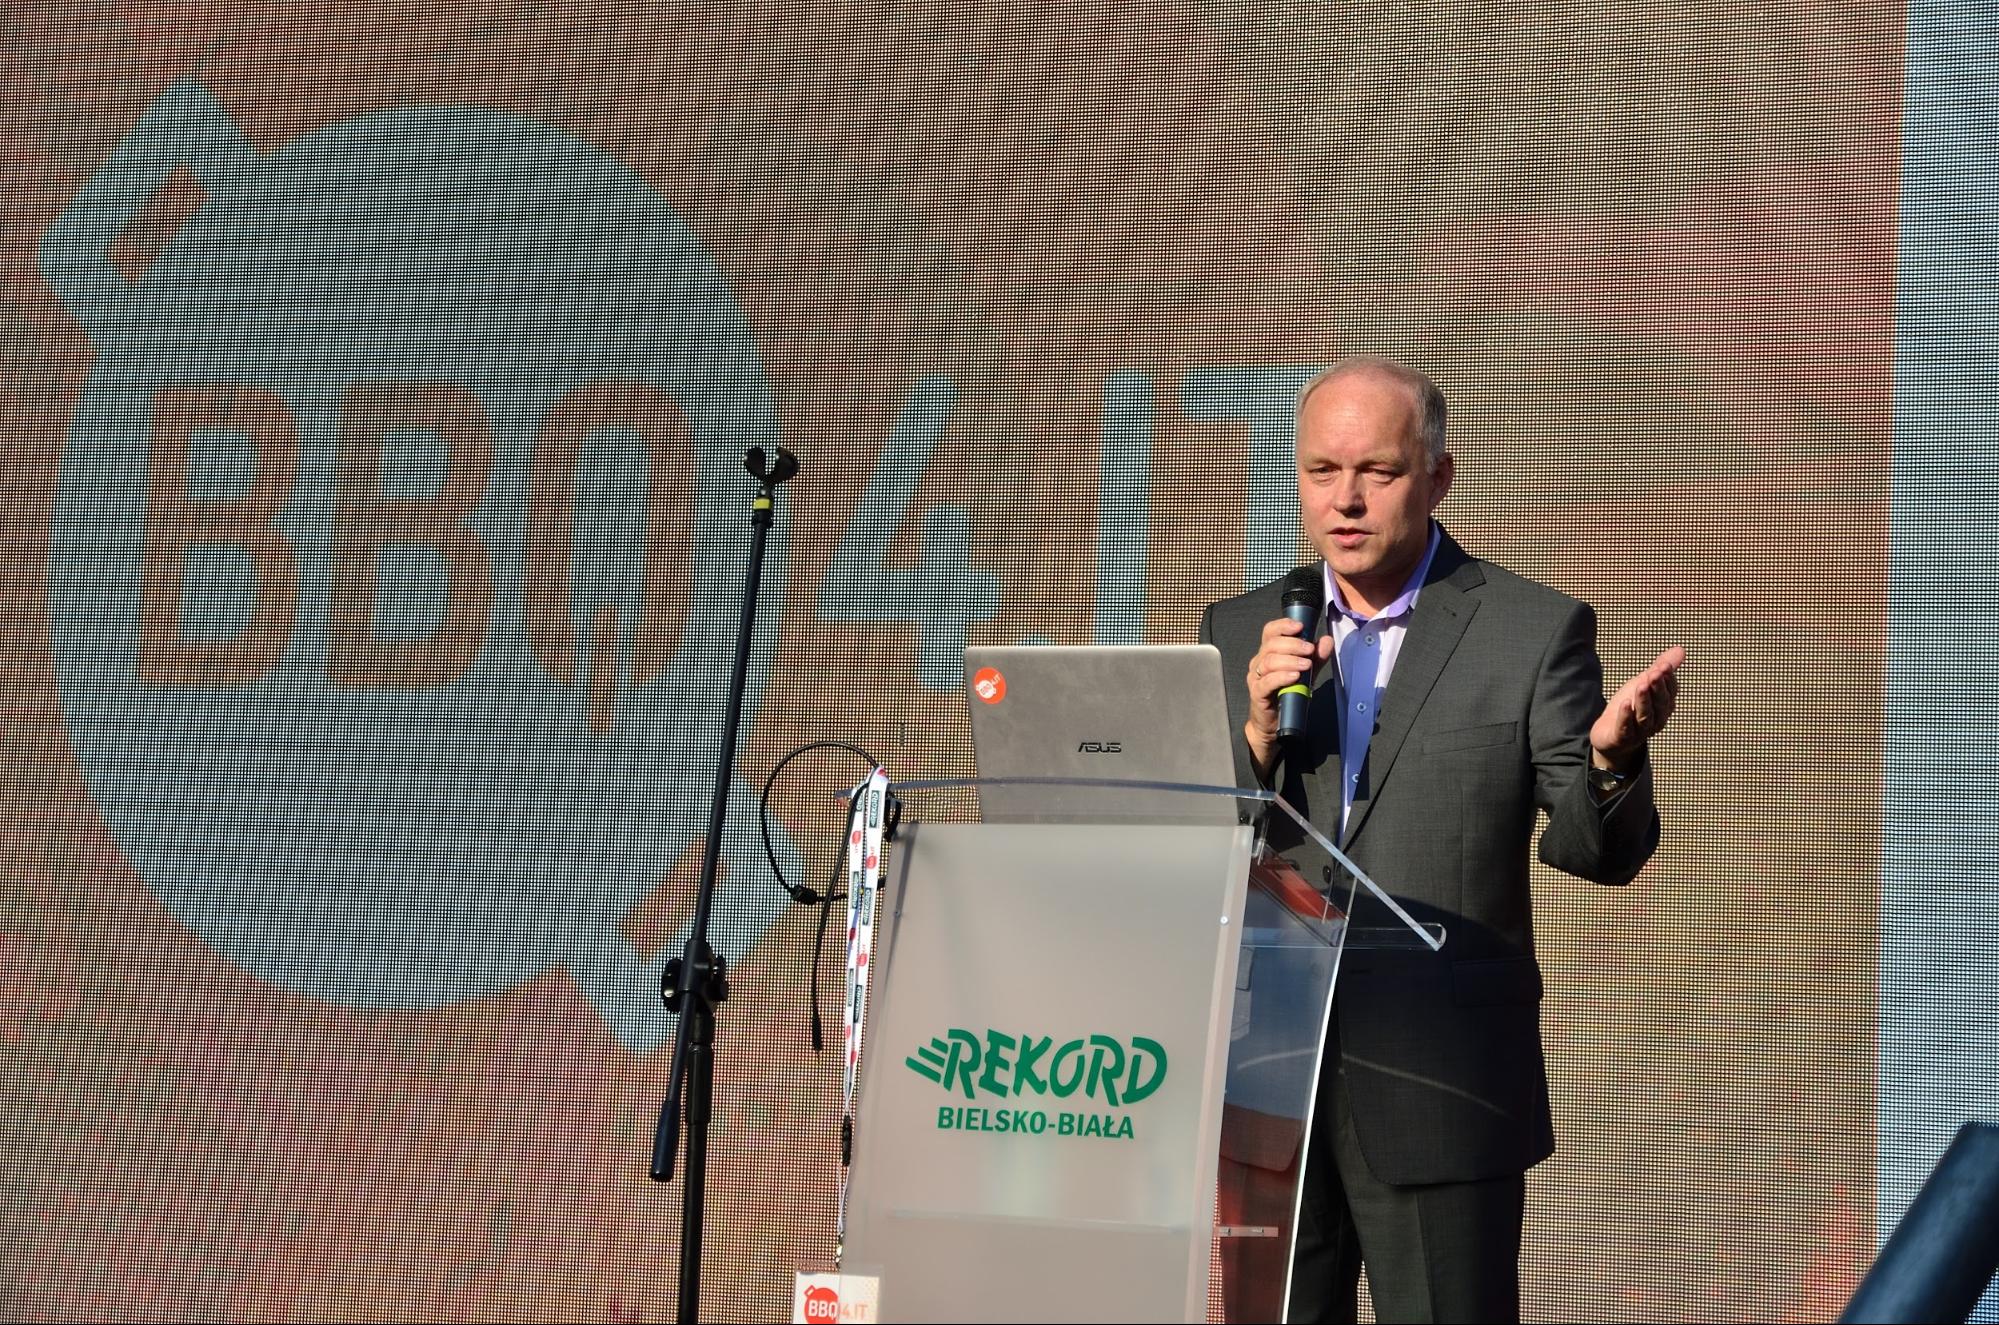 Opening talk by Janusz Szymura - chairman of Rekord Group (Photo Credit: Paweł Mazurczak)